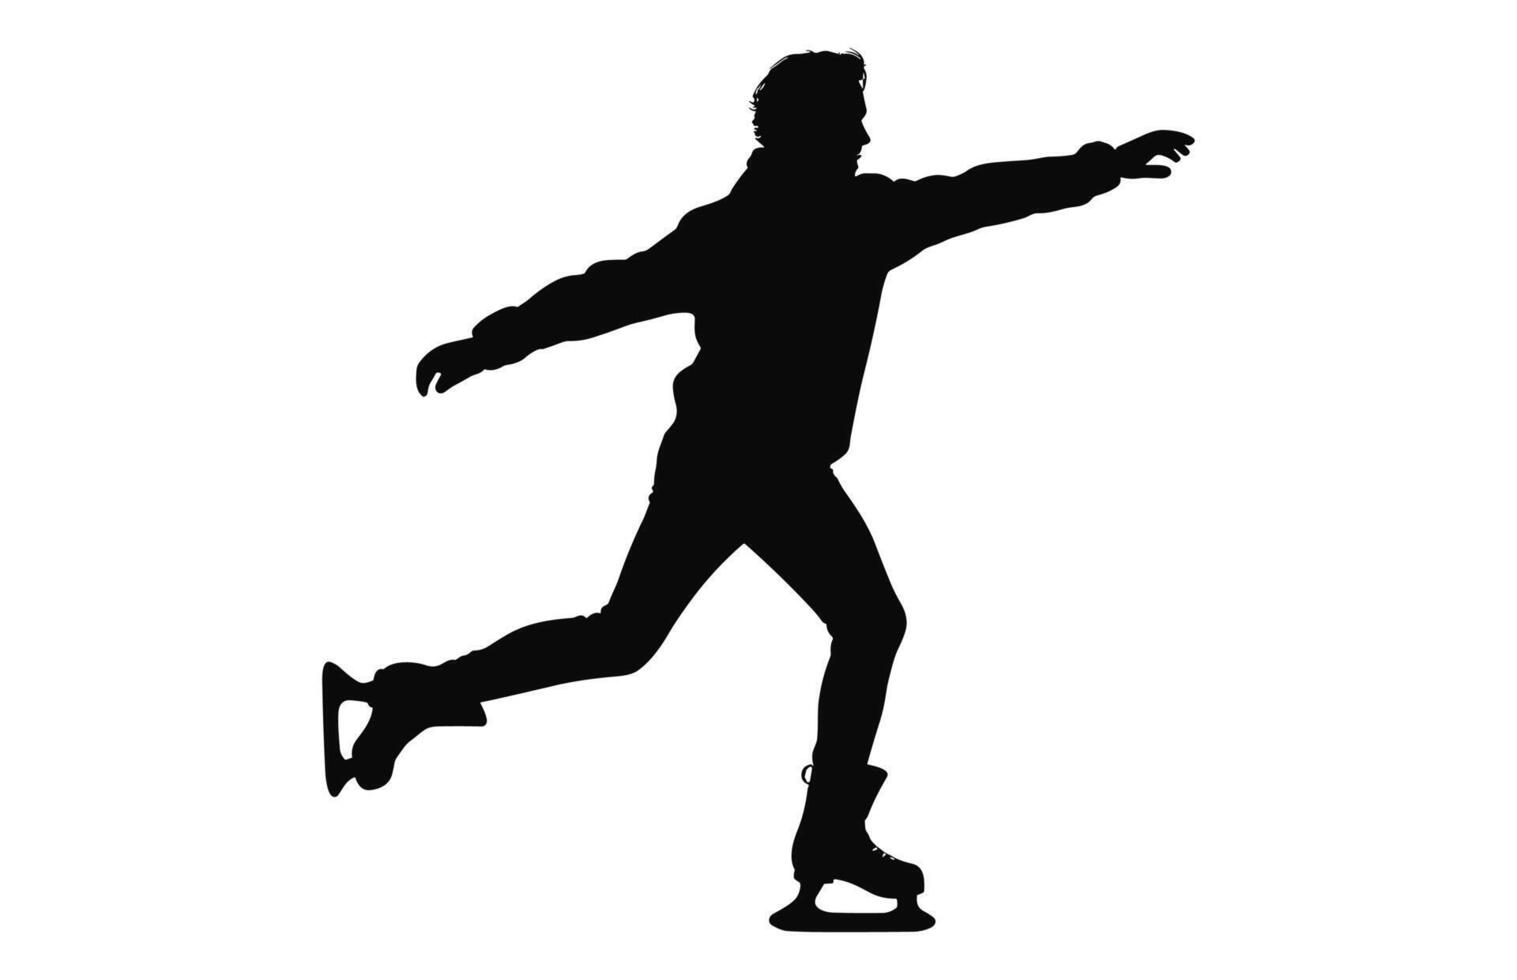 hombre figura hielo Patinaje silueta vector manojo, masculino figura patinador siluetas negro clipart conjunto